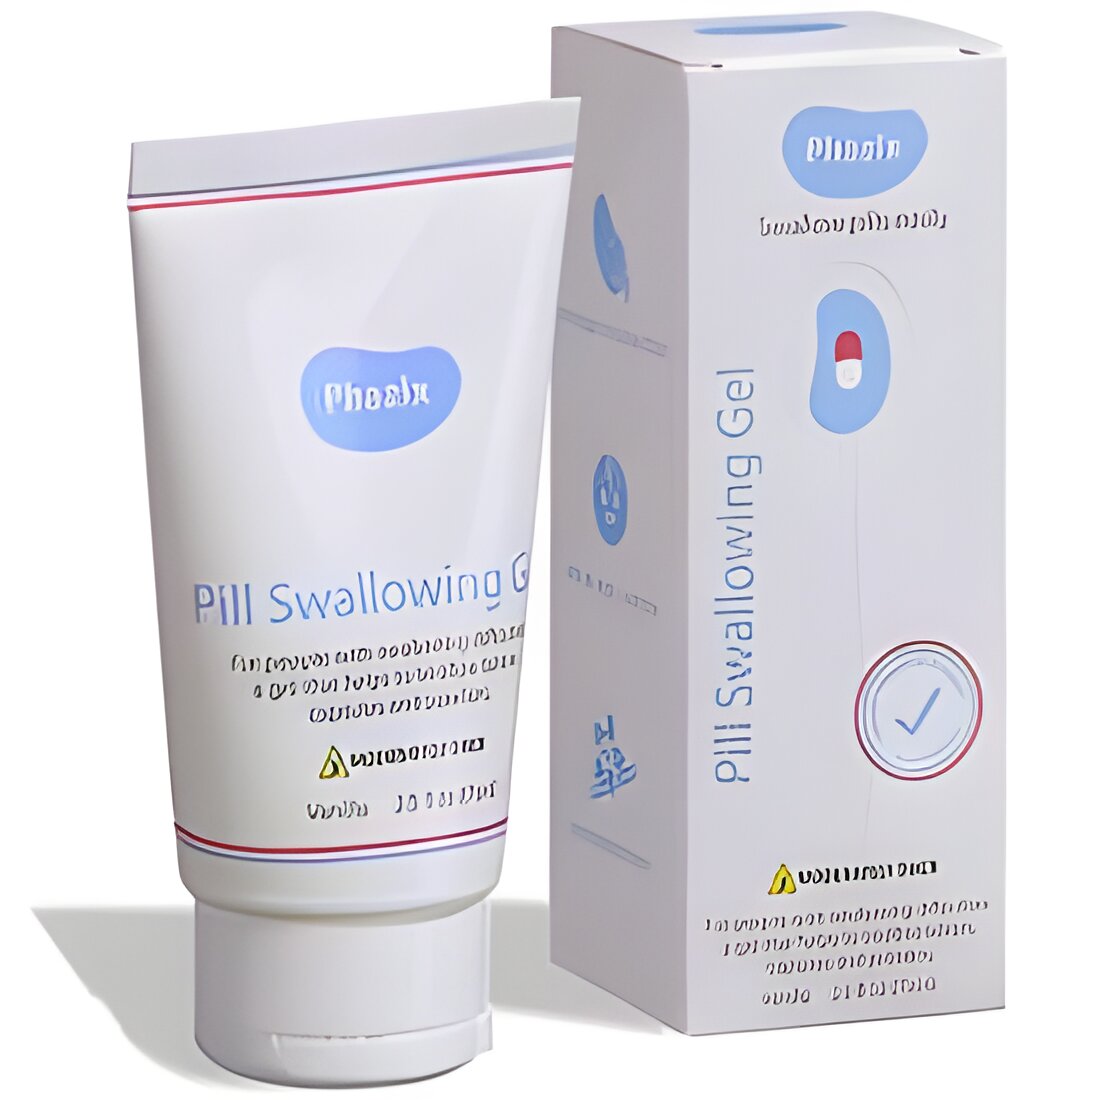 Free Phazix Pill Swallowing Gel